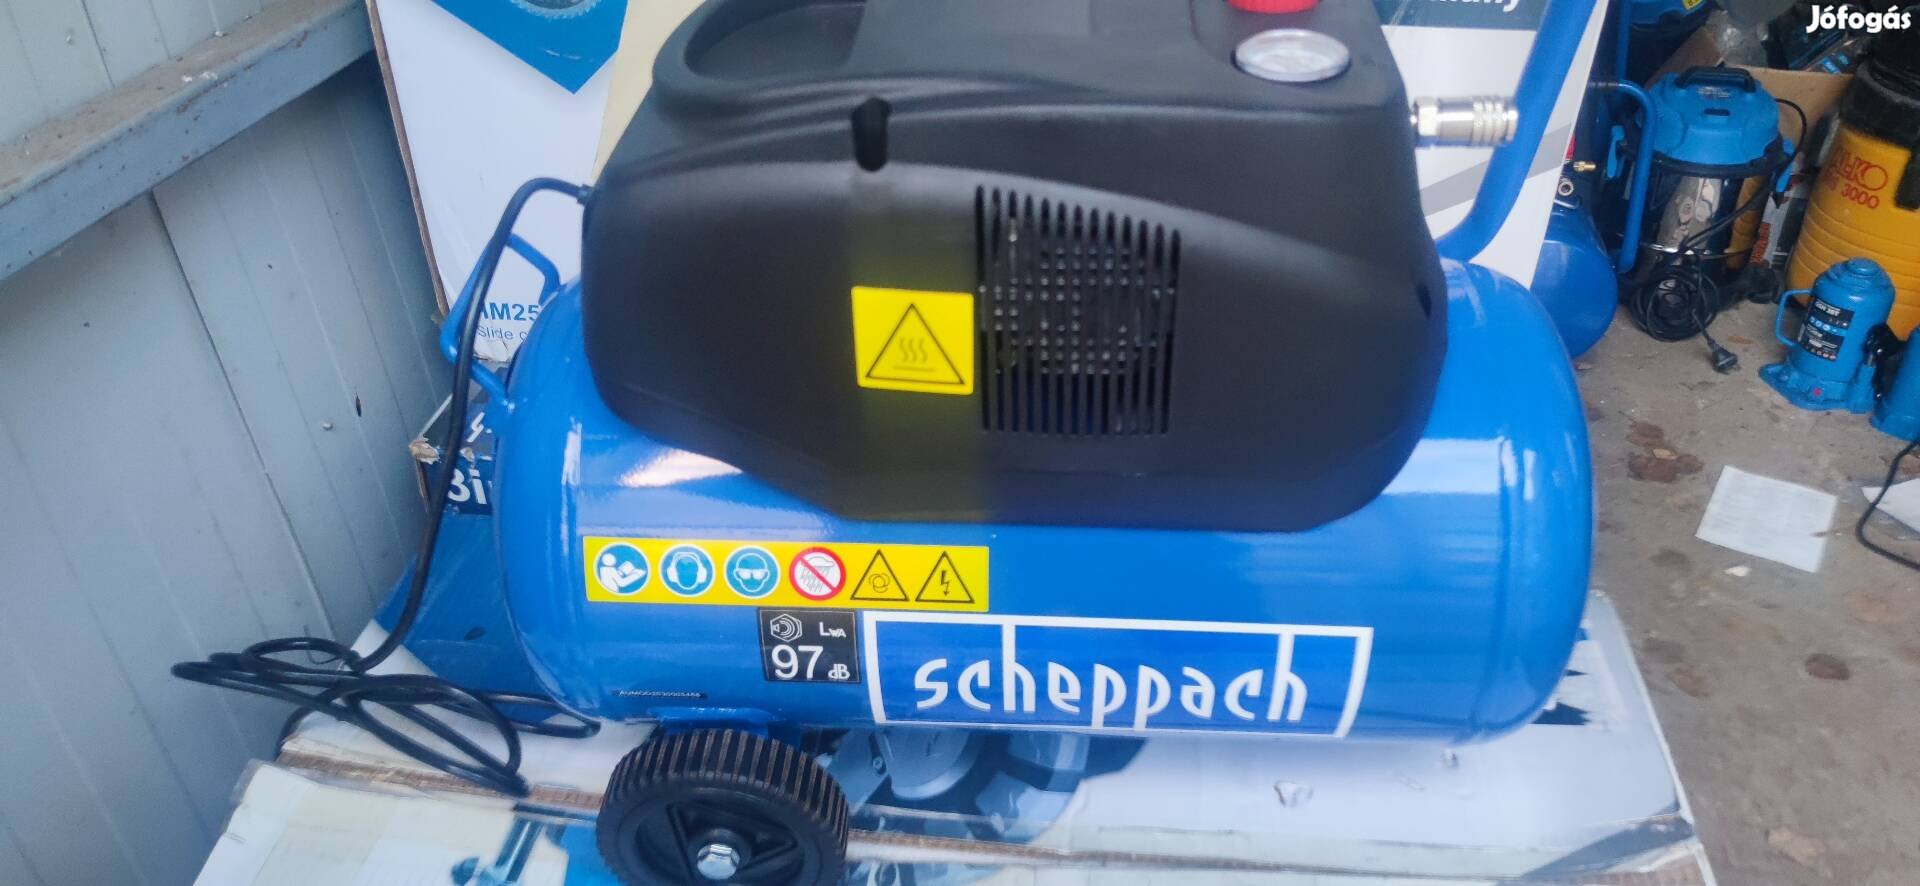 Scheppach 24 literes kompresszor gondozás mentes.